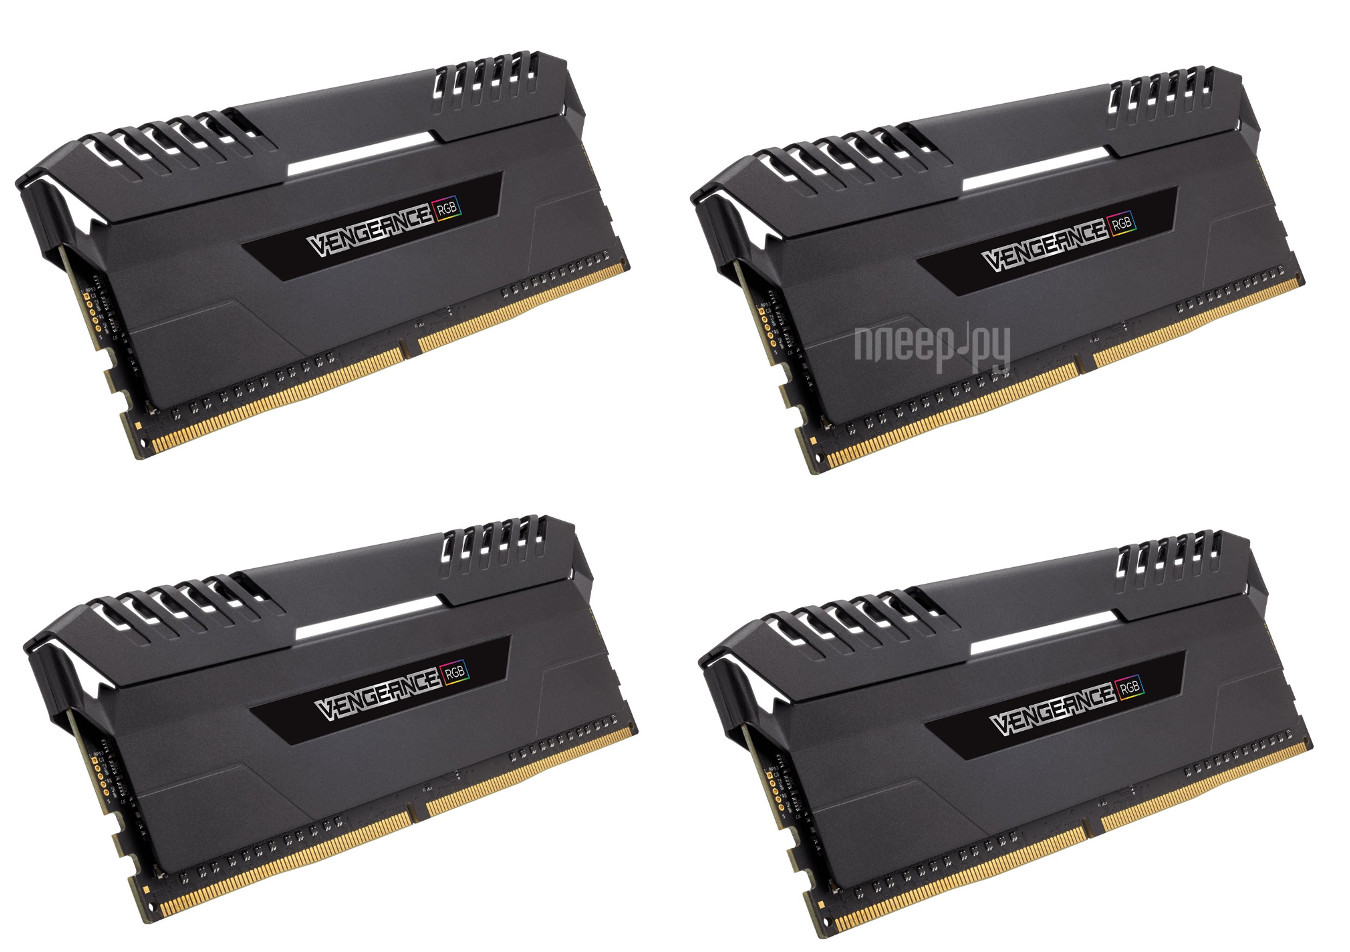   Corsair Vengeance RGB DDR4 DIMM 3333MHz PC4-26600 CL16 - 32Gb KIT (4x8Gb) CMR32GX4M4C3333C16  22767 